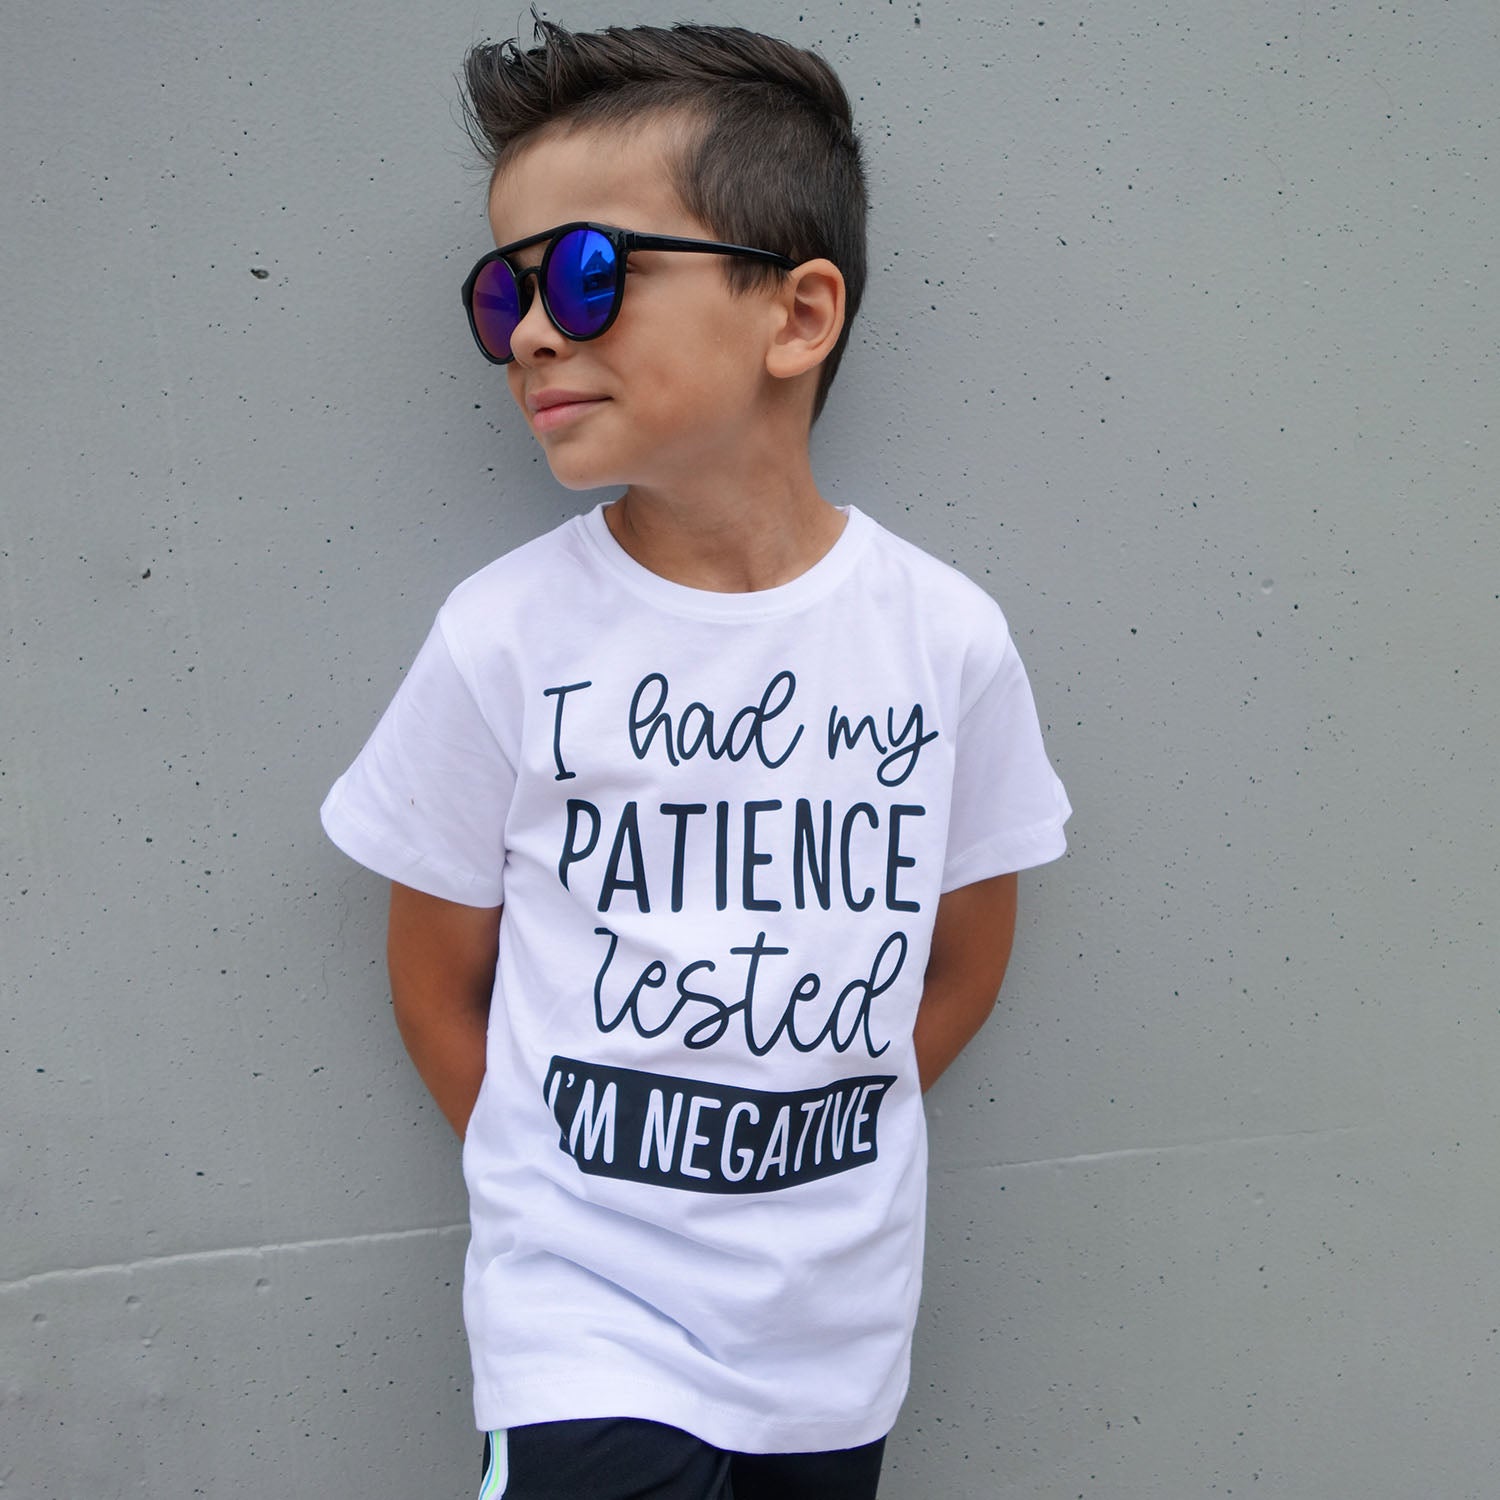 'I had my patience tested - I'm negative' kids shortsleeve shirt